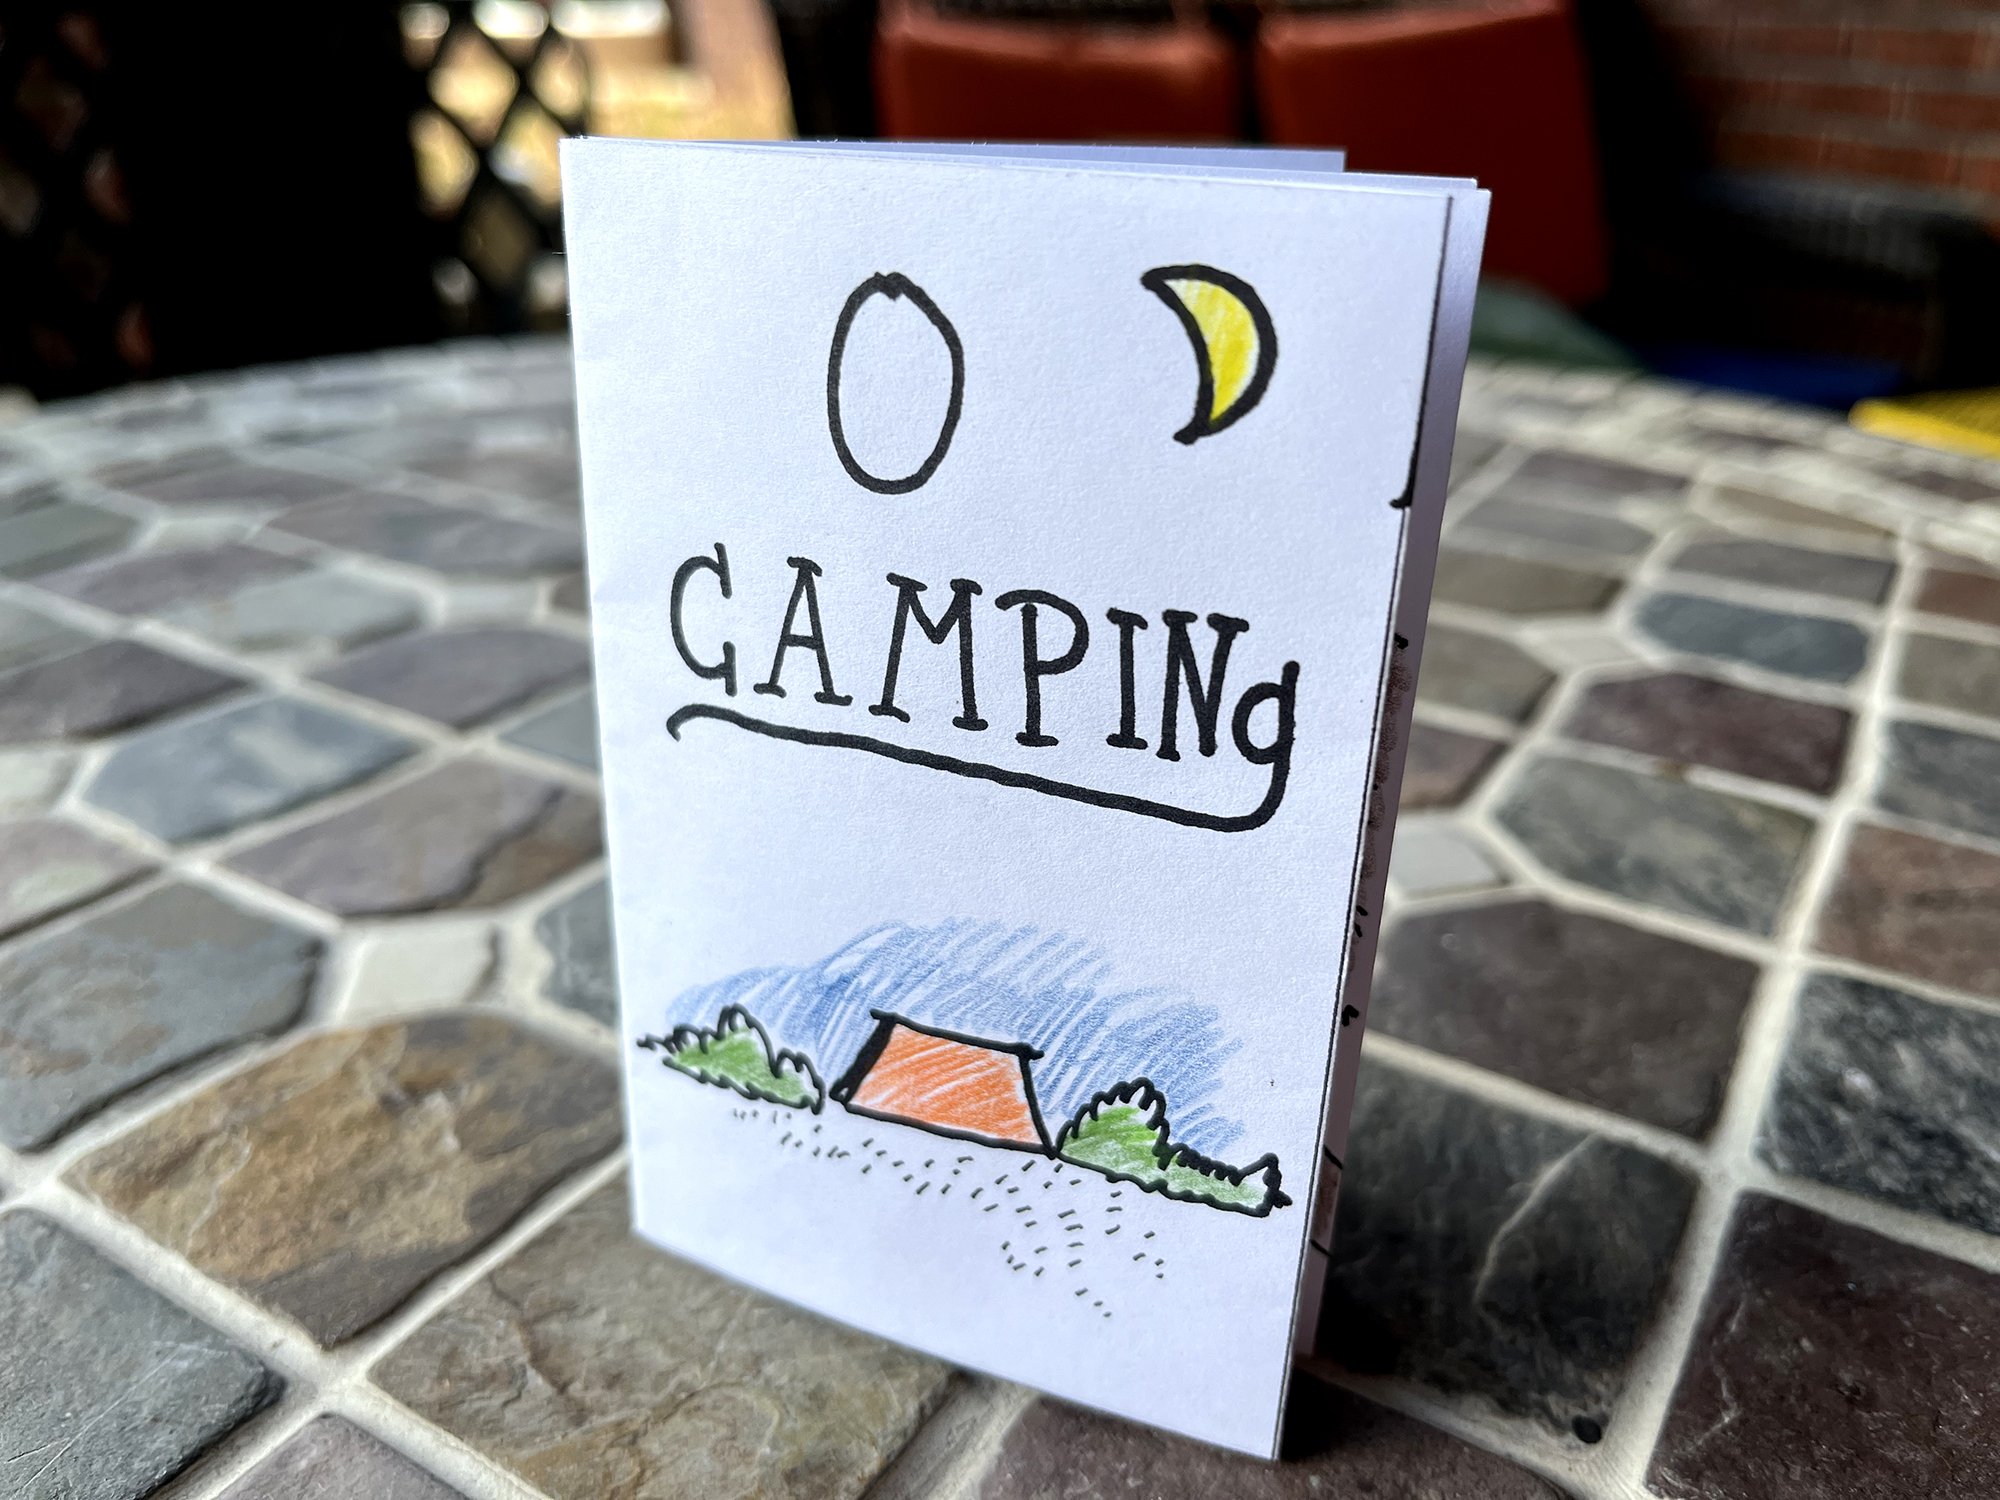 "Camping" by Danica Novgorodoff